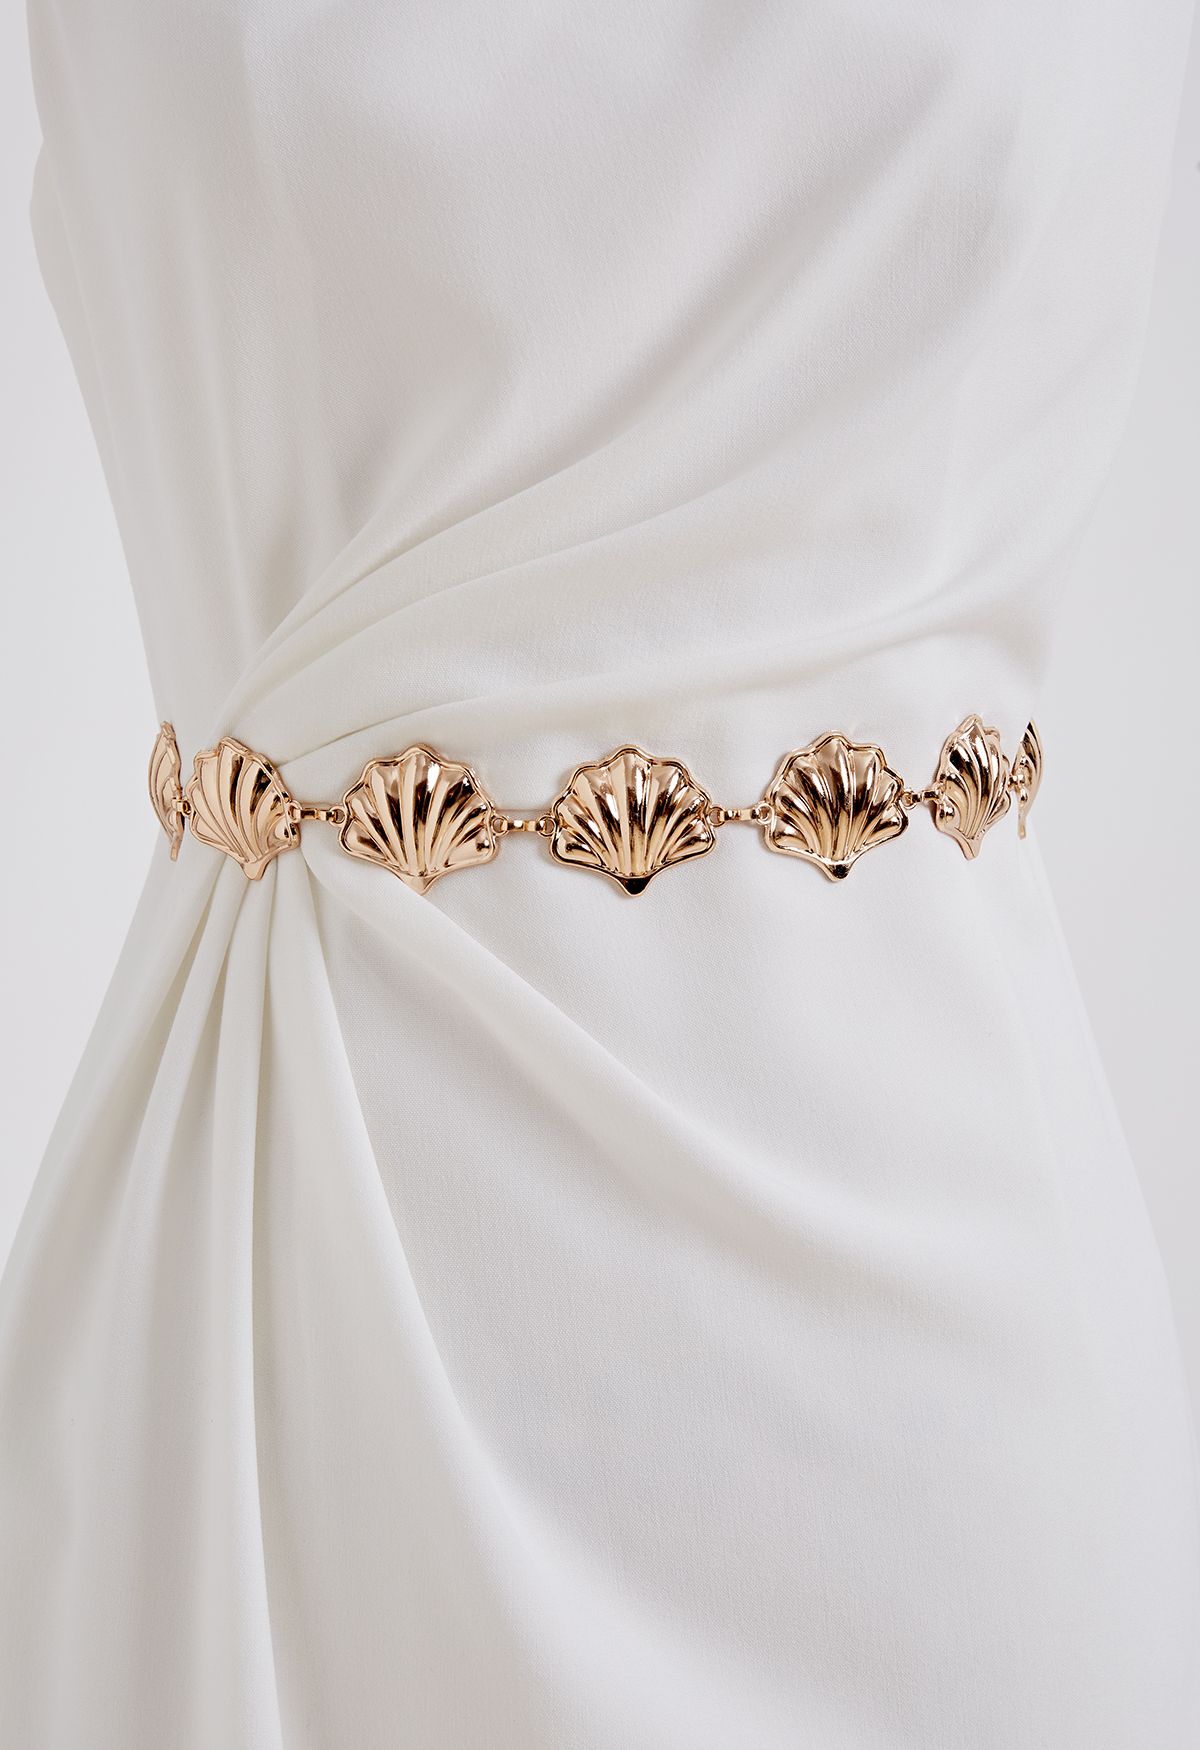 Sleeky Golden Seashell Chain Belt